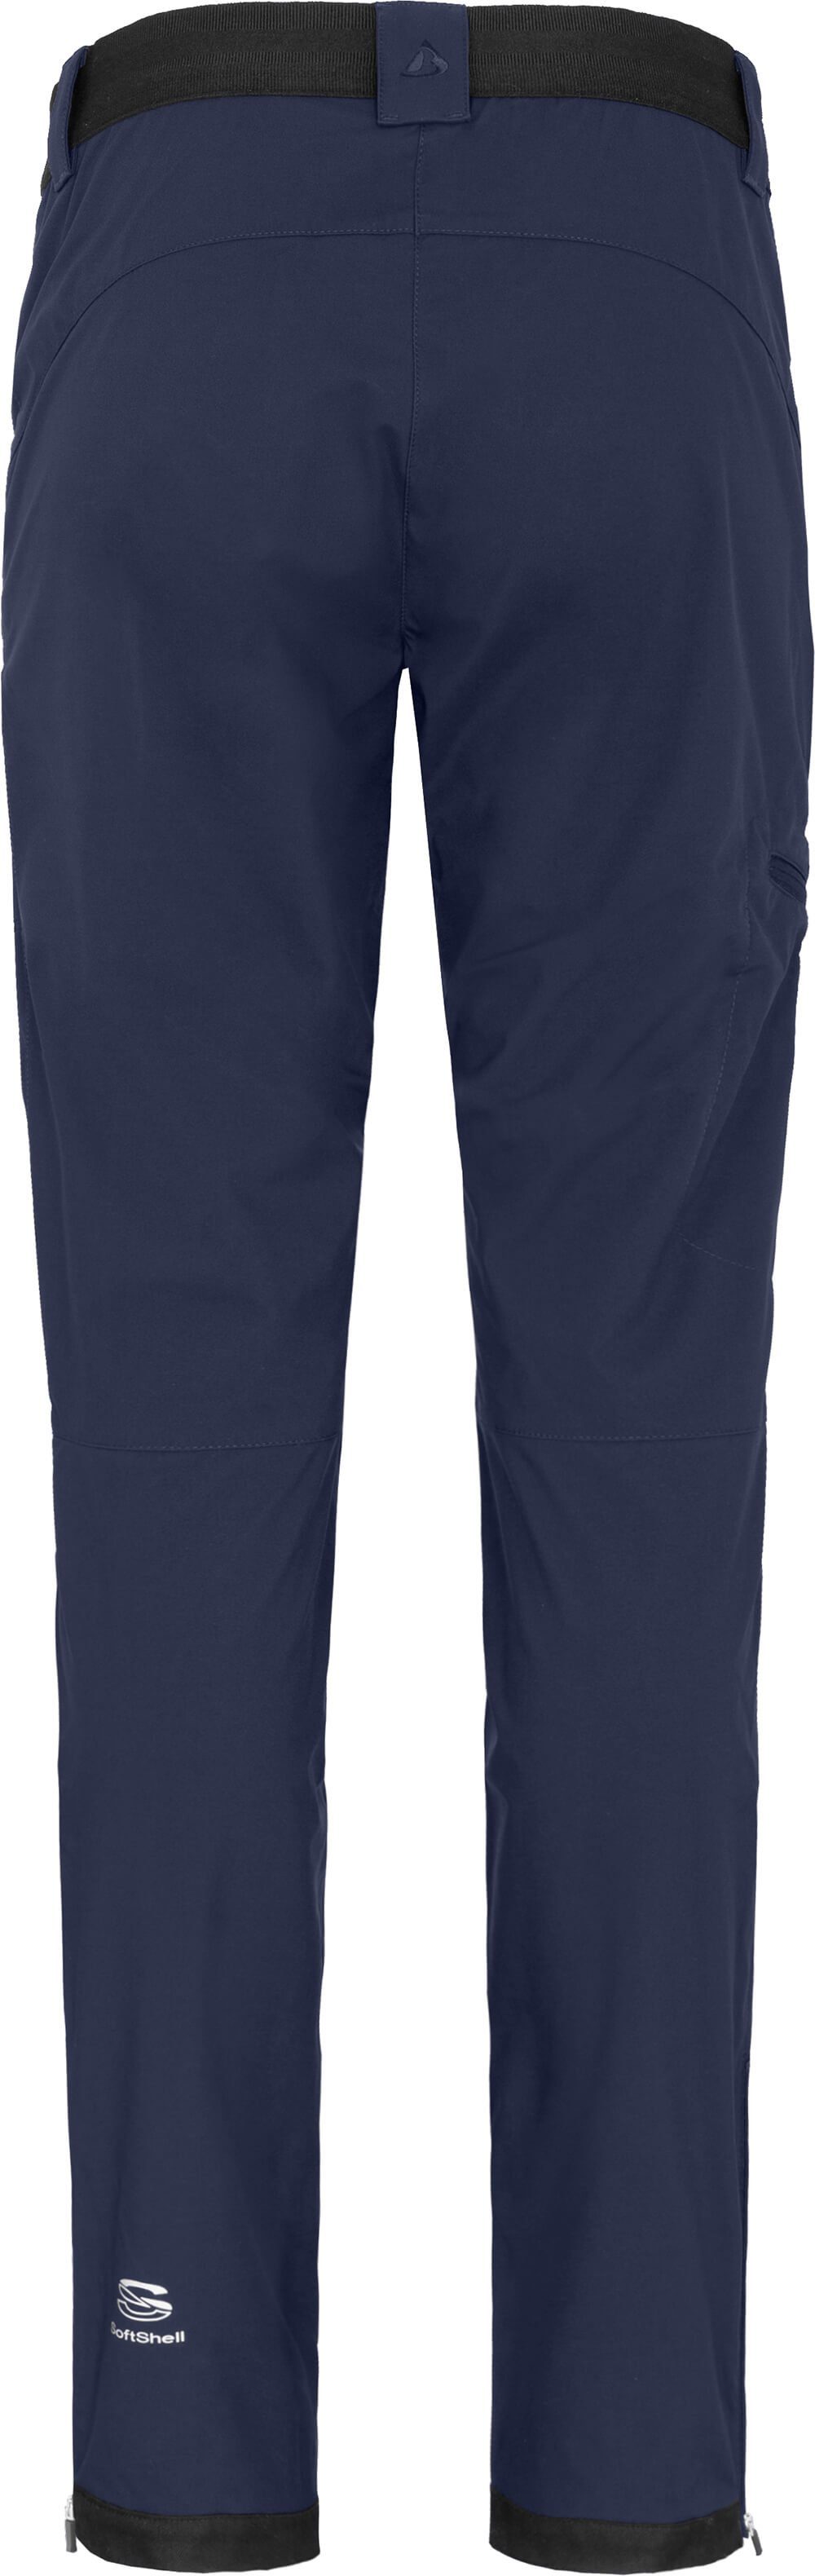 Bergson Outdoorhose TESSE COMFORT (slim) Damen Softshellhose, winddicht,  strapazierfähig, Kurzgrößen, peacoat blau